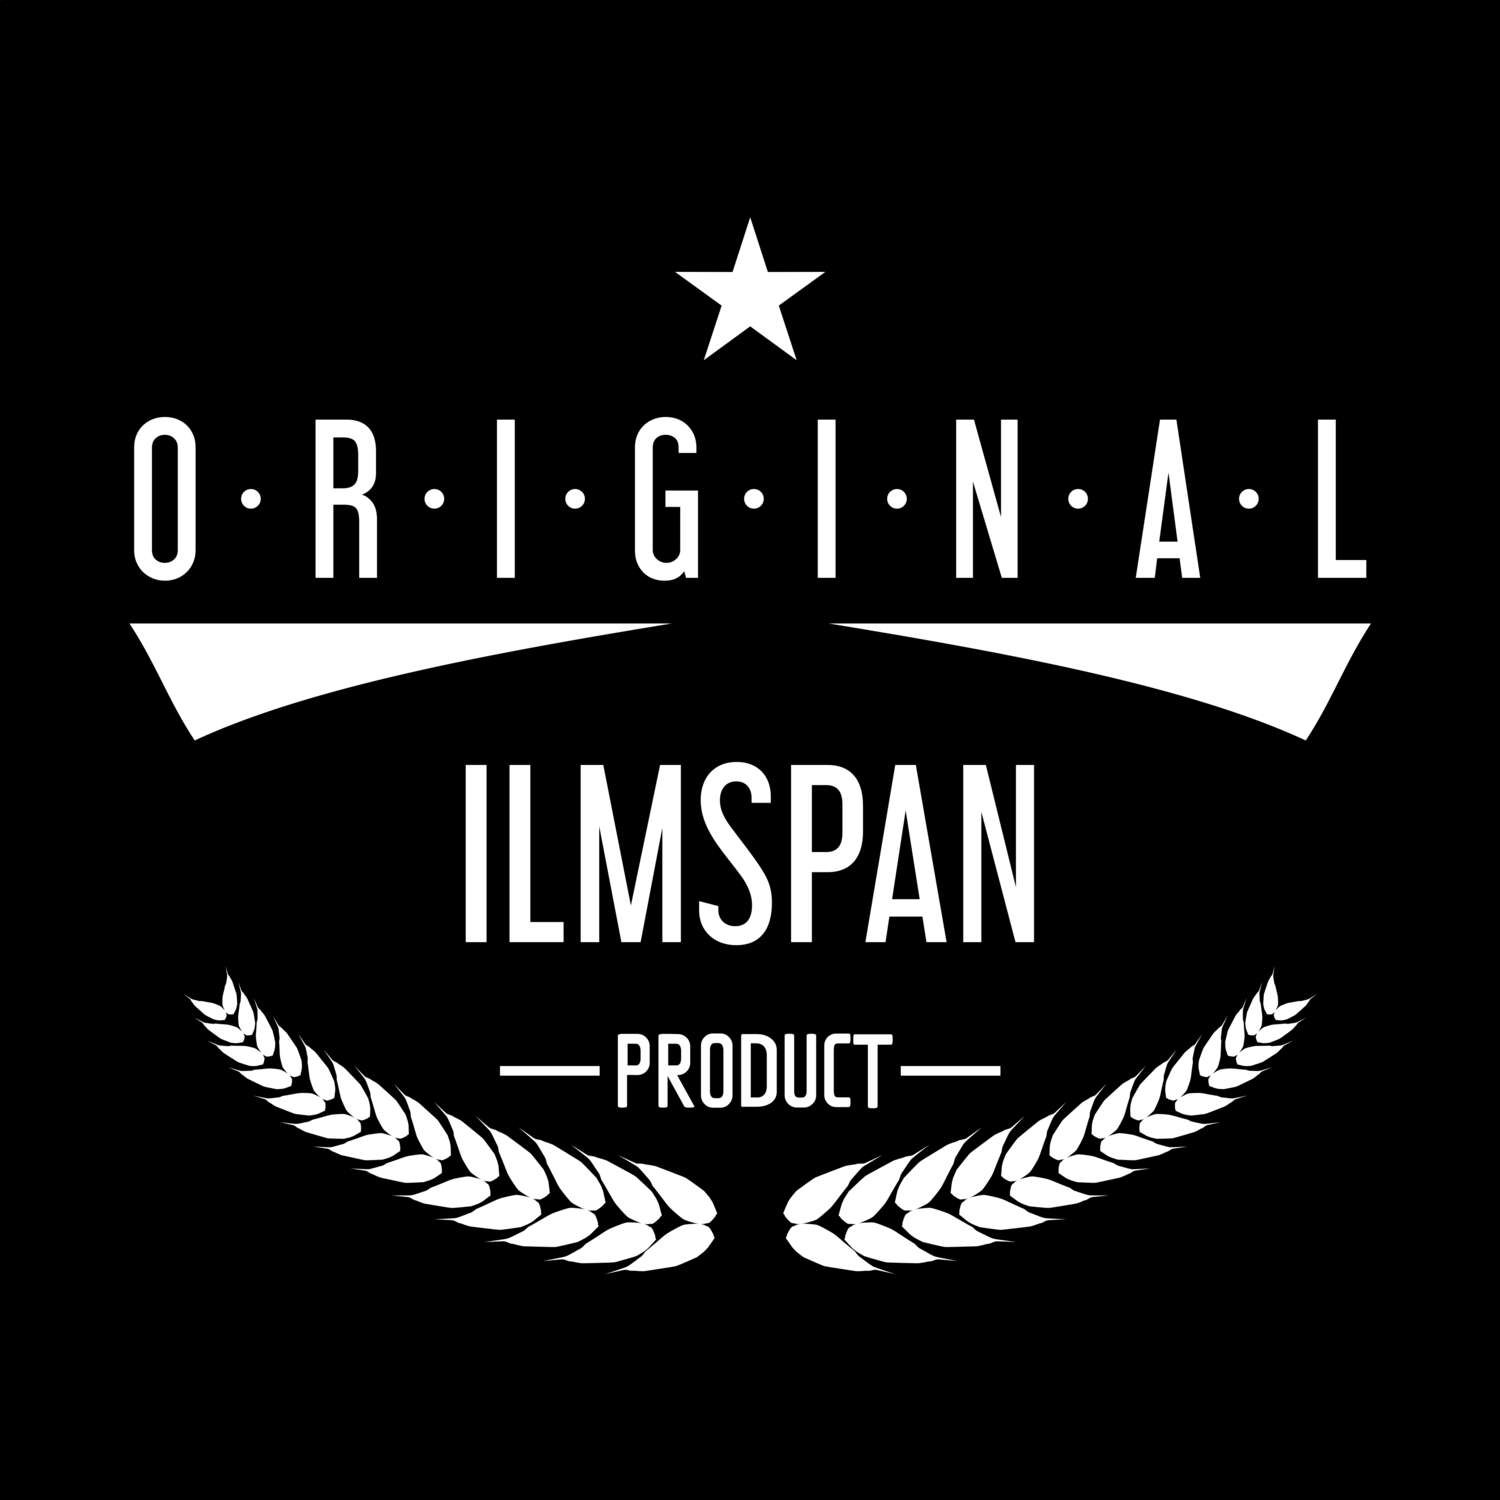 Ilmspan T-Shirt »Original Product«